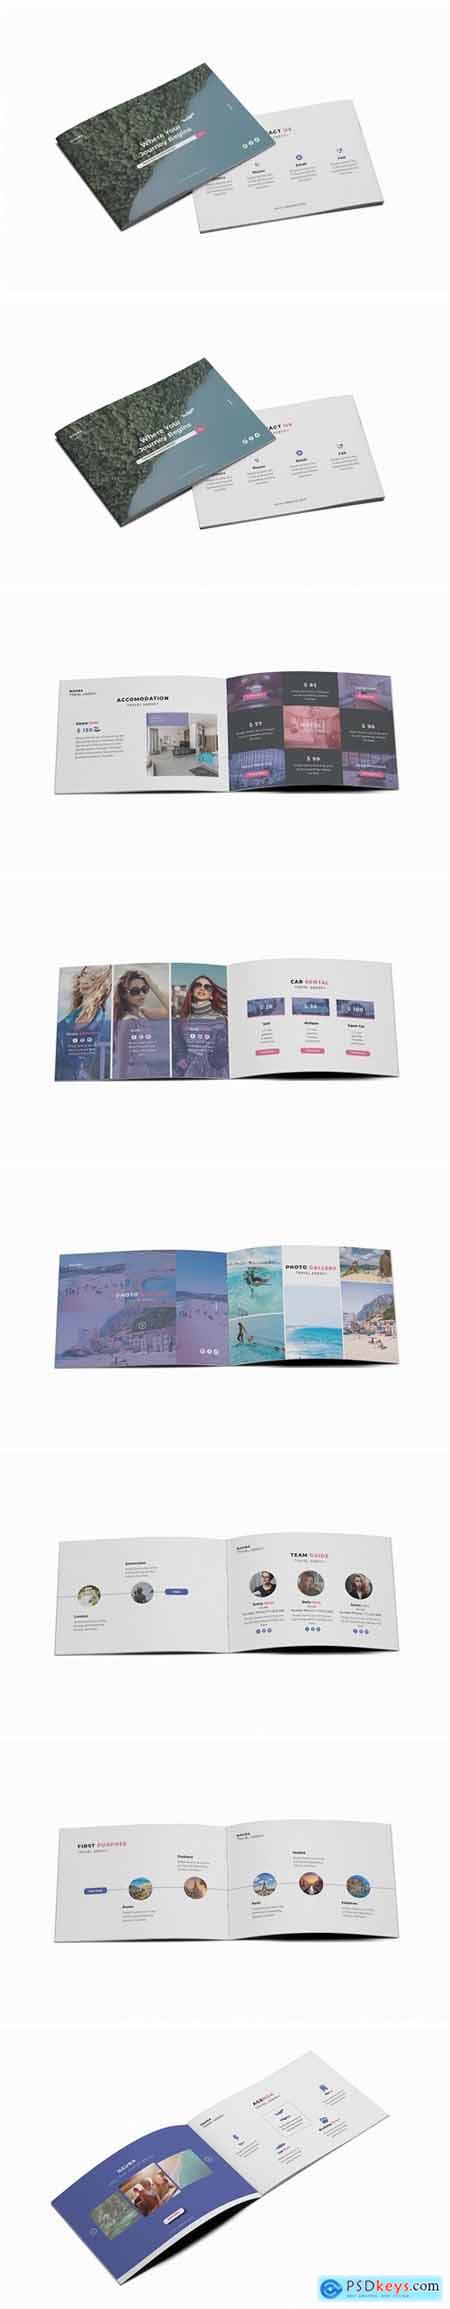 Nauna - Travel Agency A5 Brochure